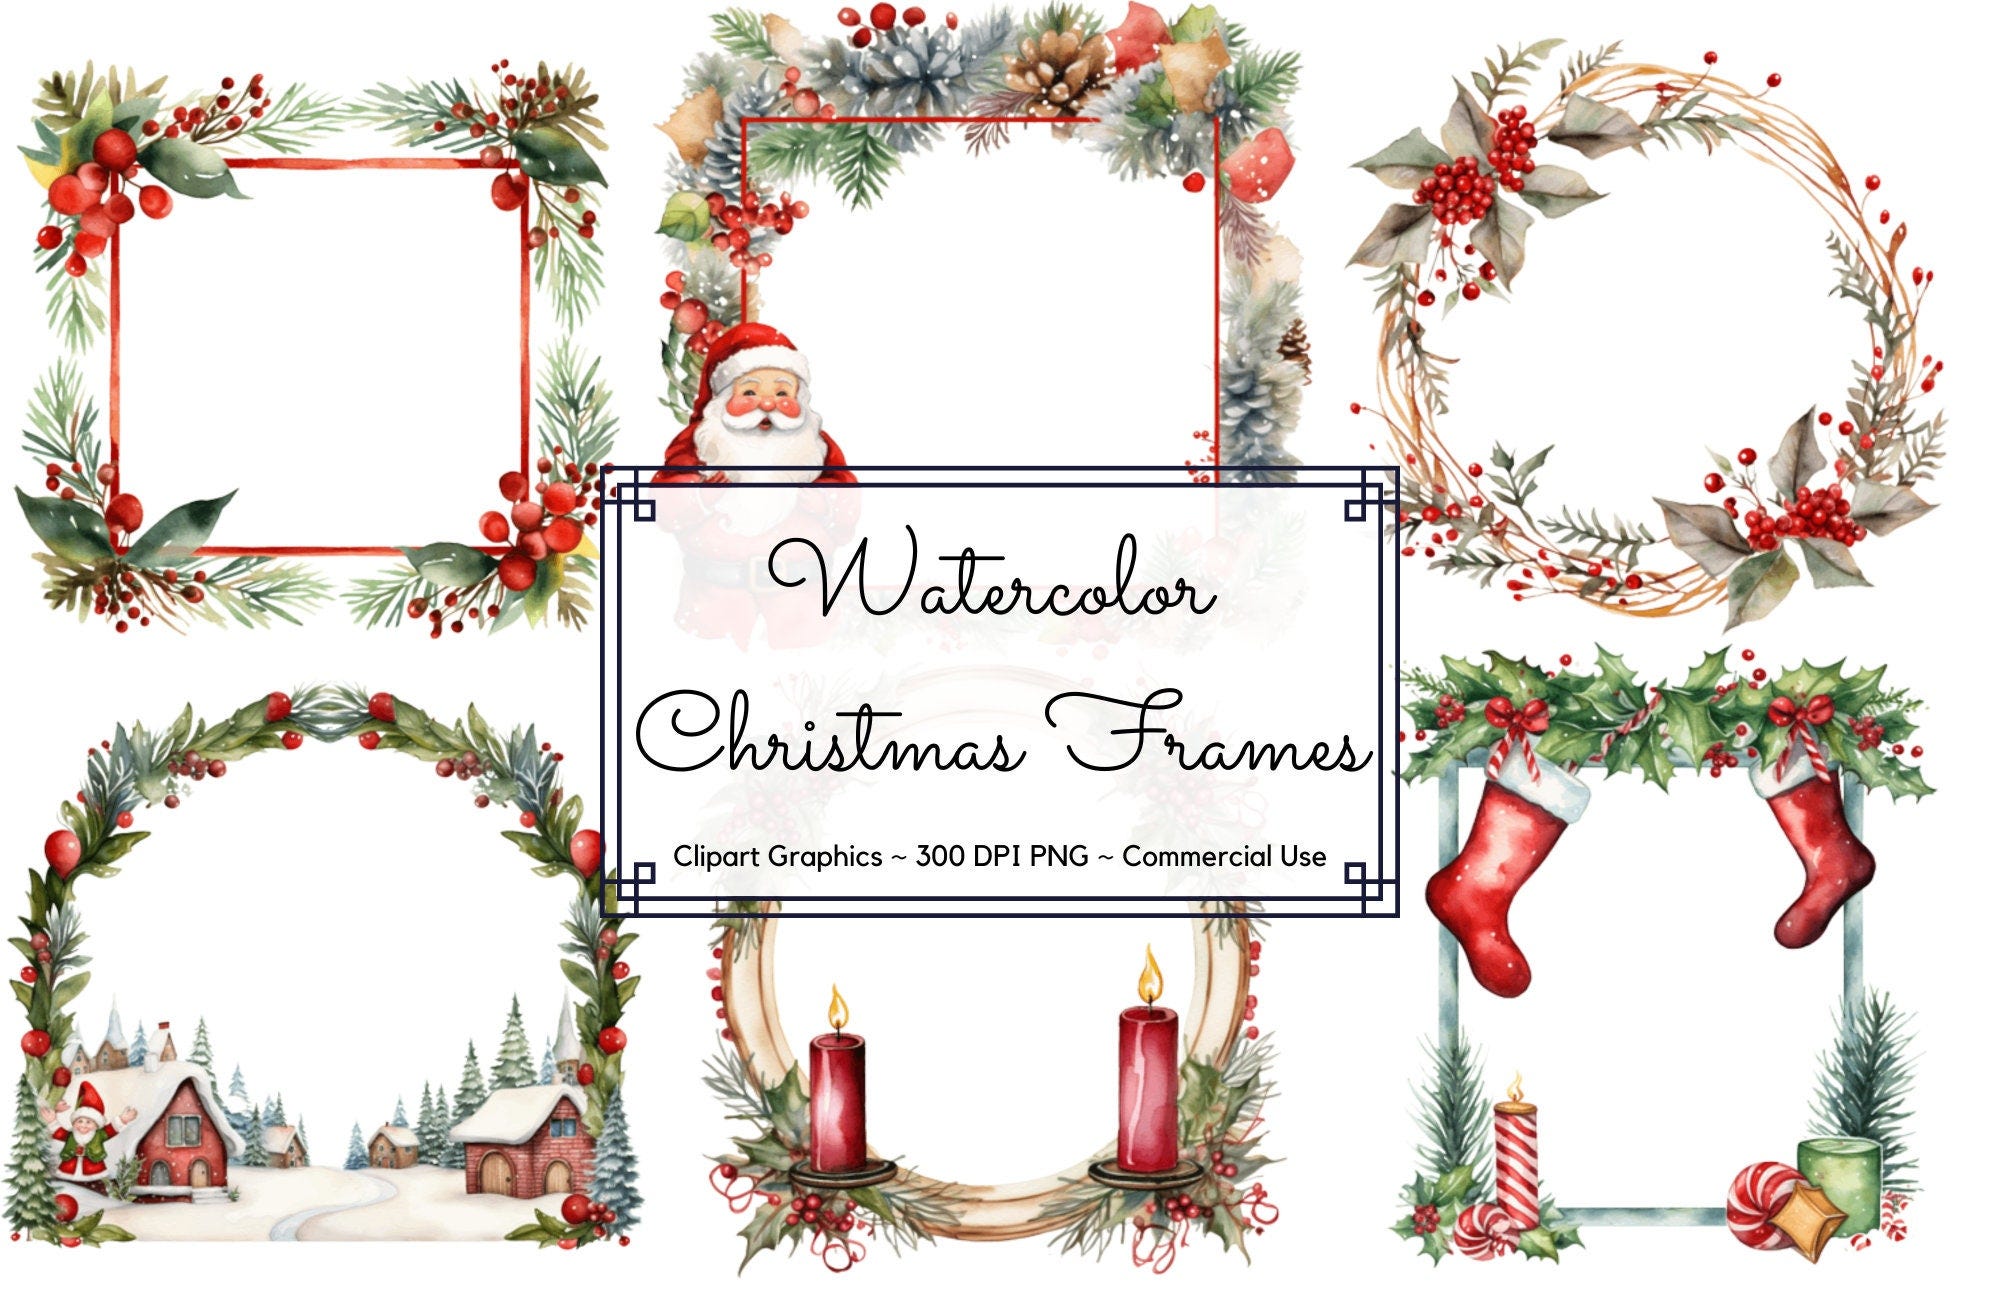 25 Watercolor Christmas Frames Clipart Bundle - Christmas Watercolor PNG format instant download - Commercial Use - Transparent Backgrounds